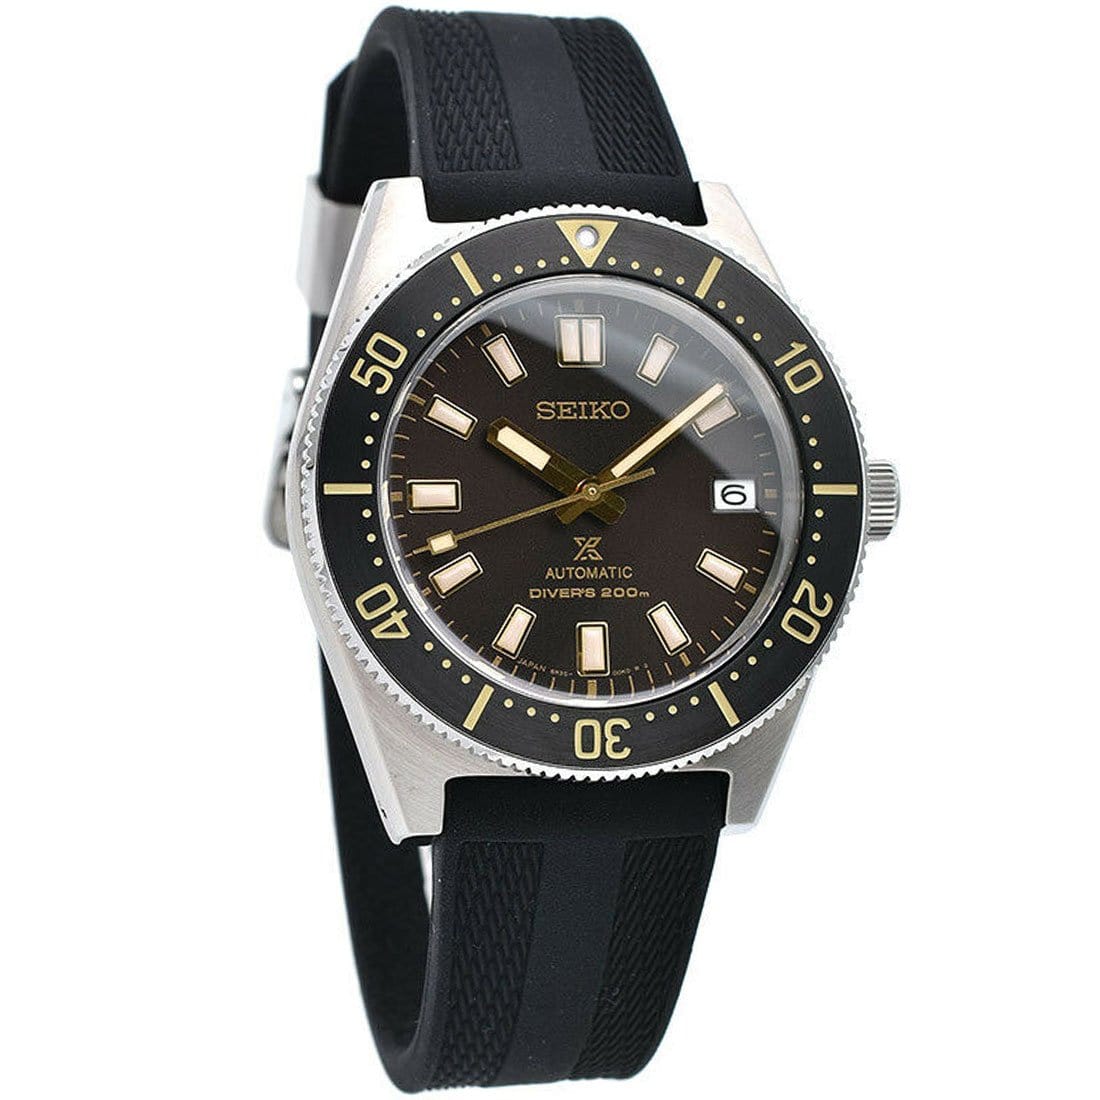 SBDC105 Seiko Prospex Automatic Divers 200M JDM Watch